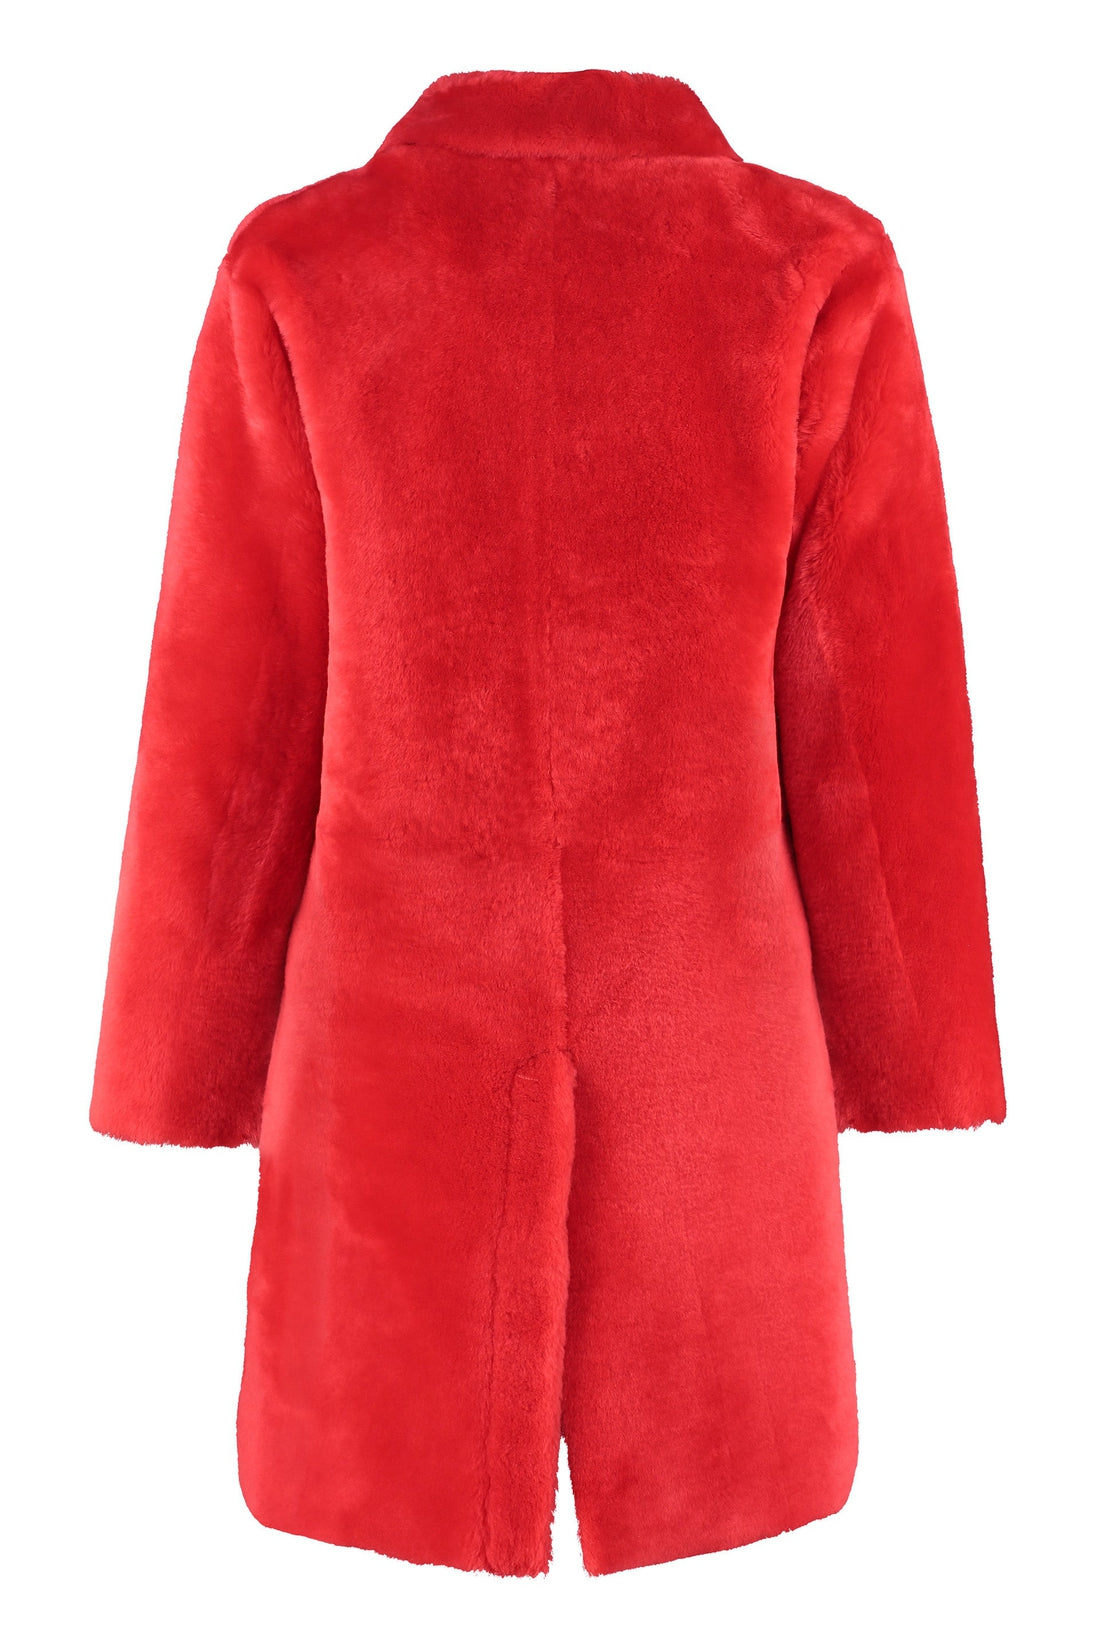 RED VALENTINO-OUTLET-SALE-Lamb fur coat-ARCHIVIST